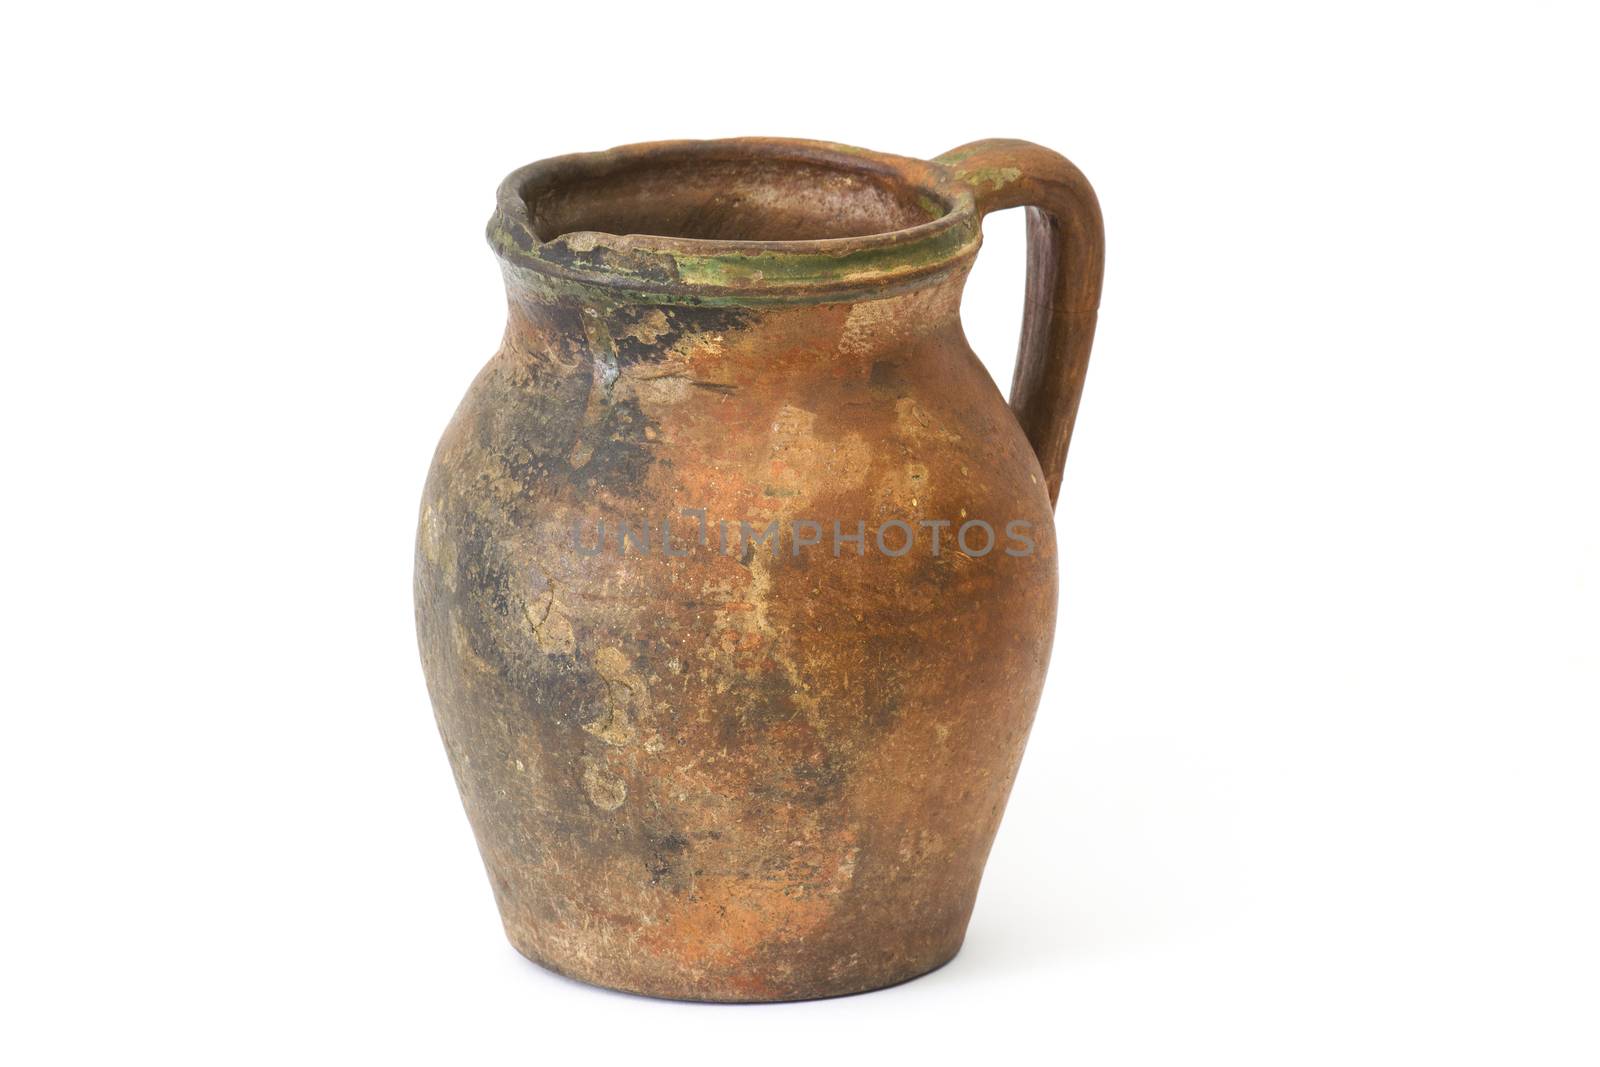 Clay jug, old ceramic vase isolated on white background by miradrozdowski